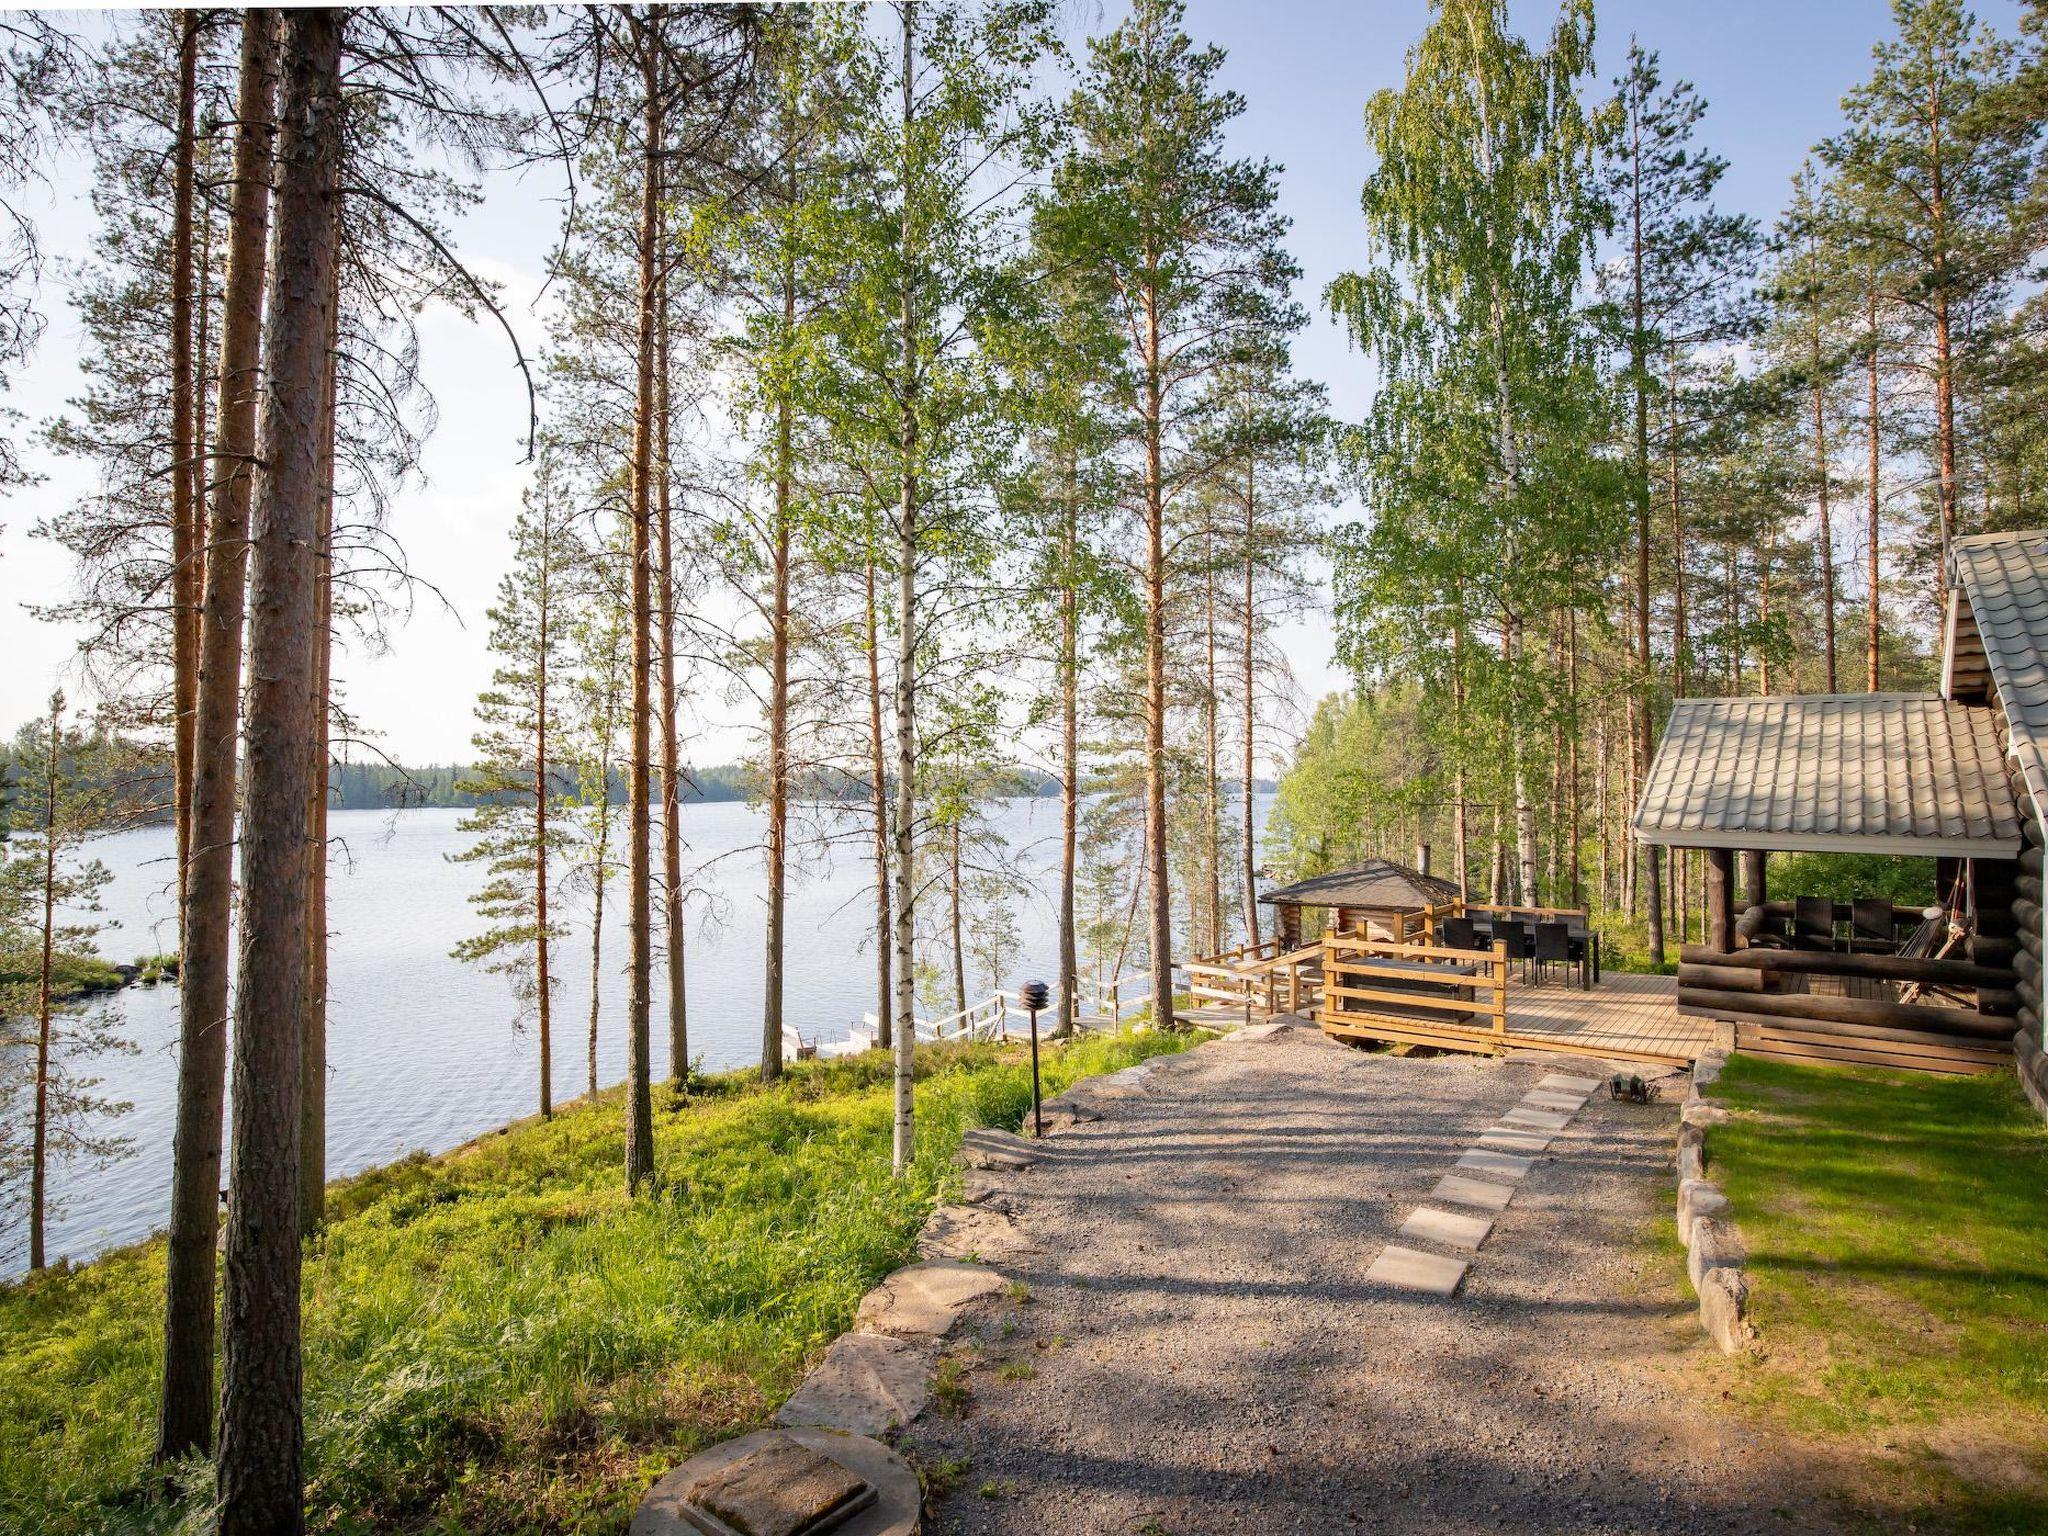 Photo 2 - 2 bedroom House in Mikkeli with sauna